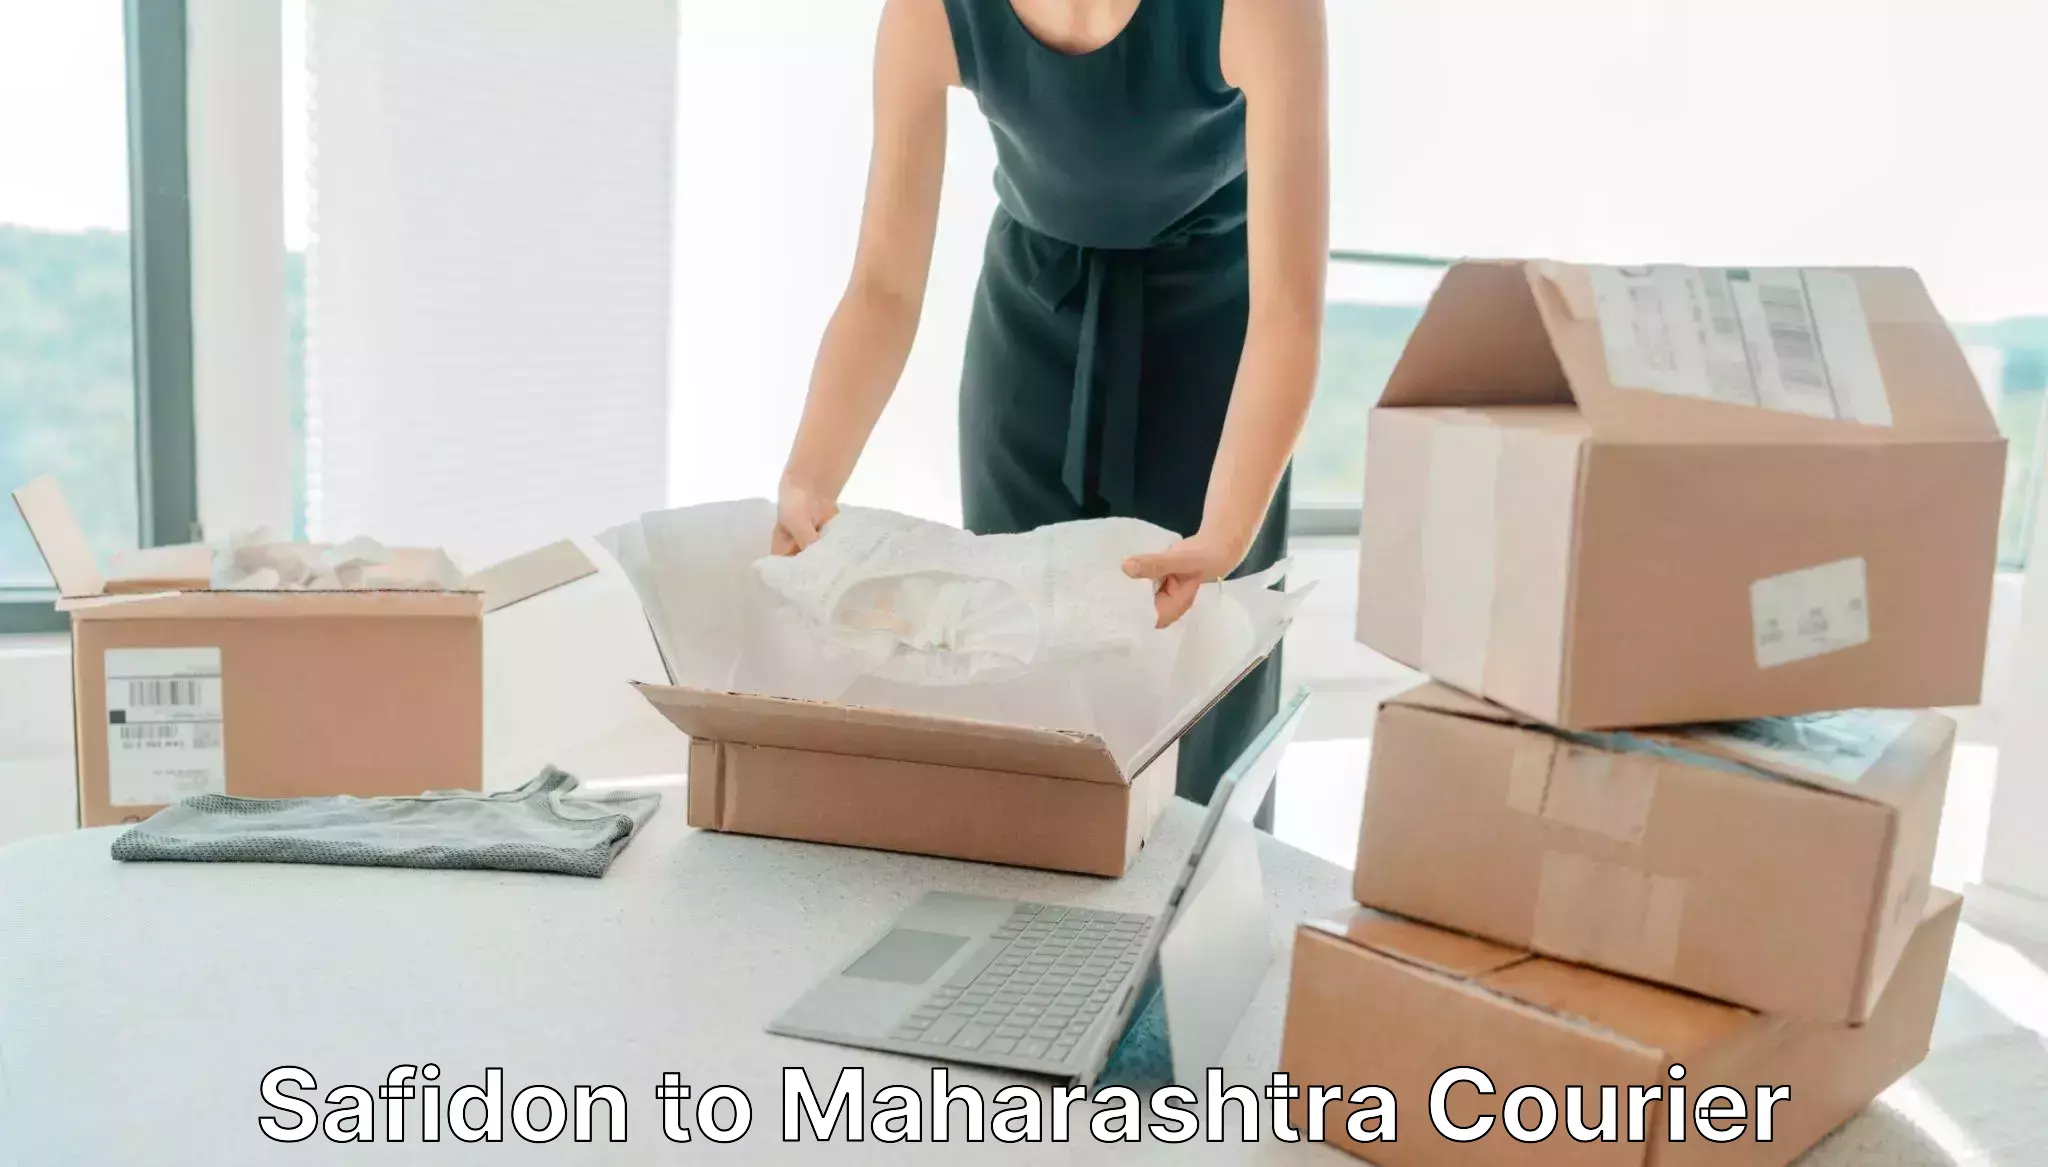 Local delivery service Safidon to Maharashtra